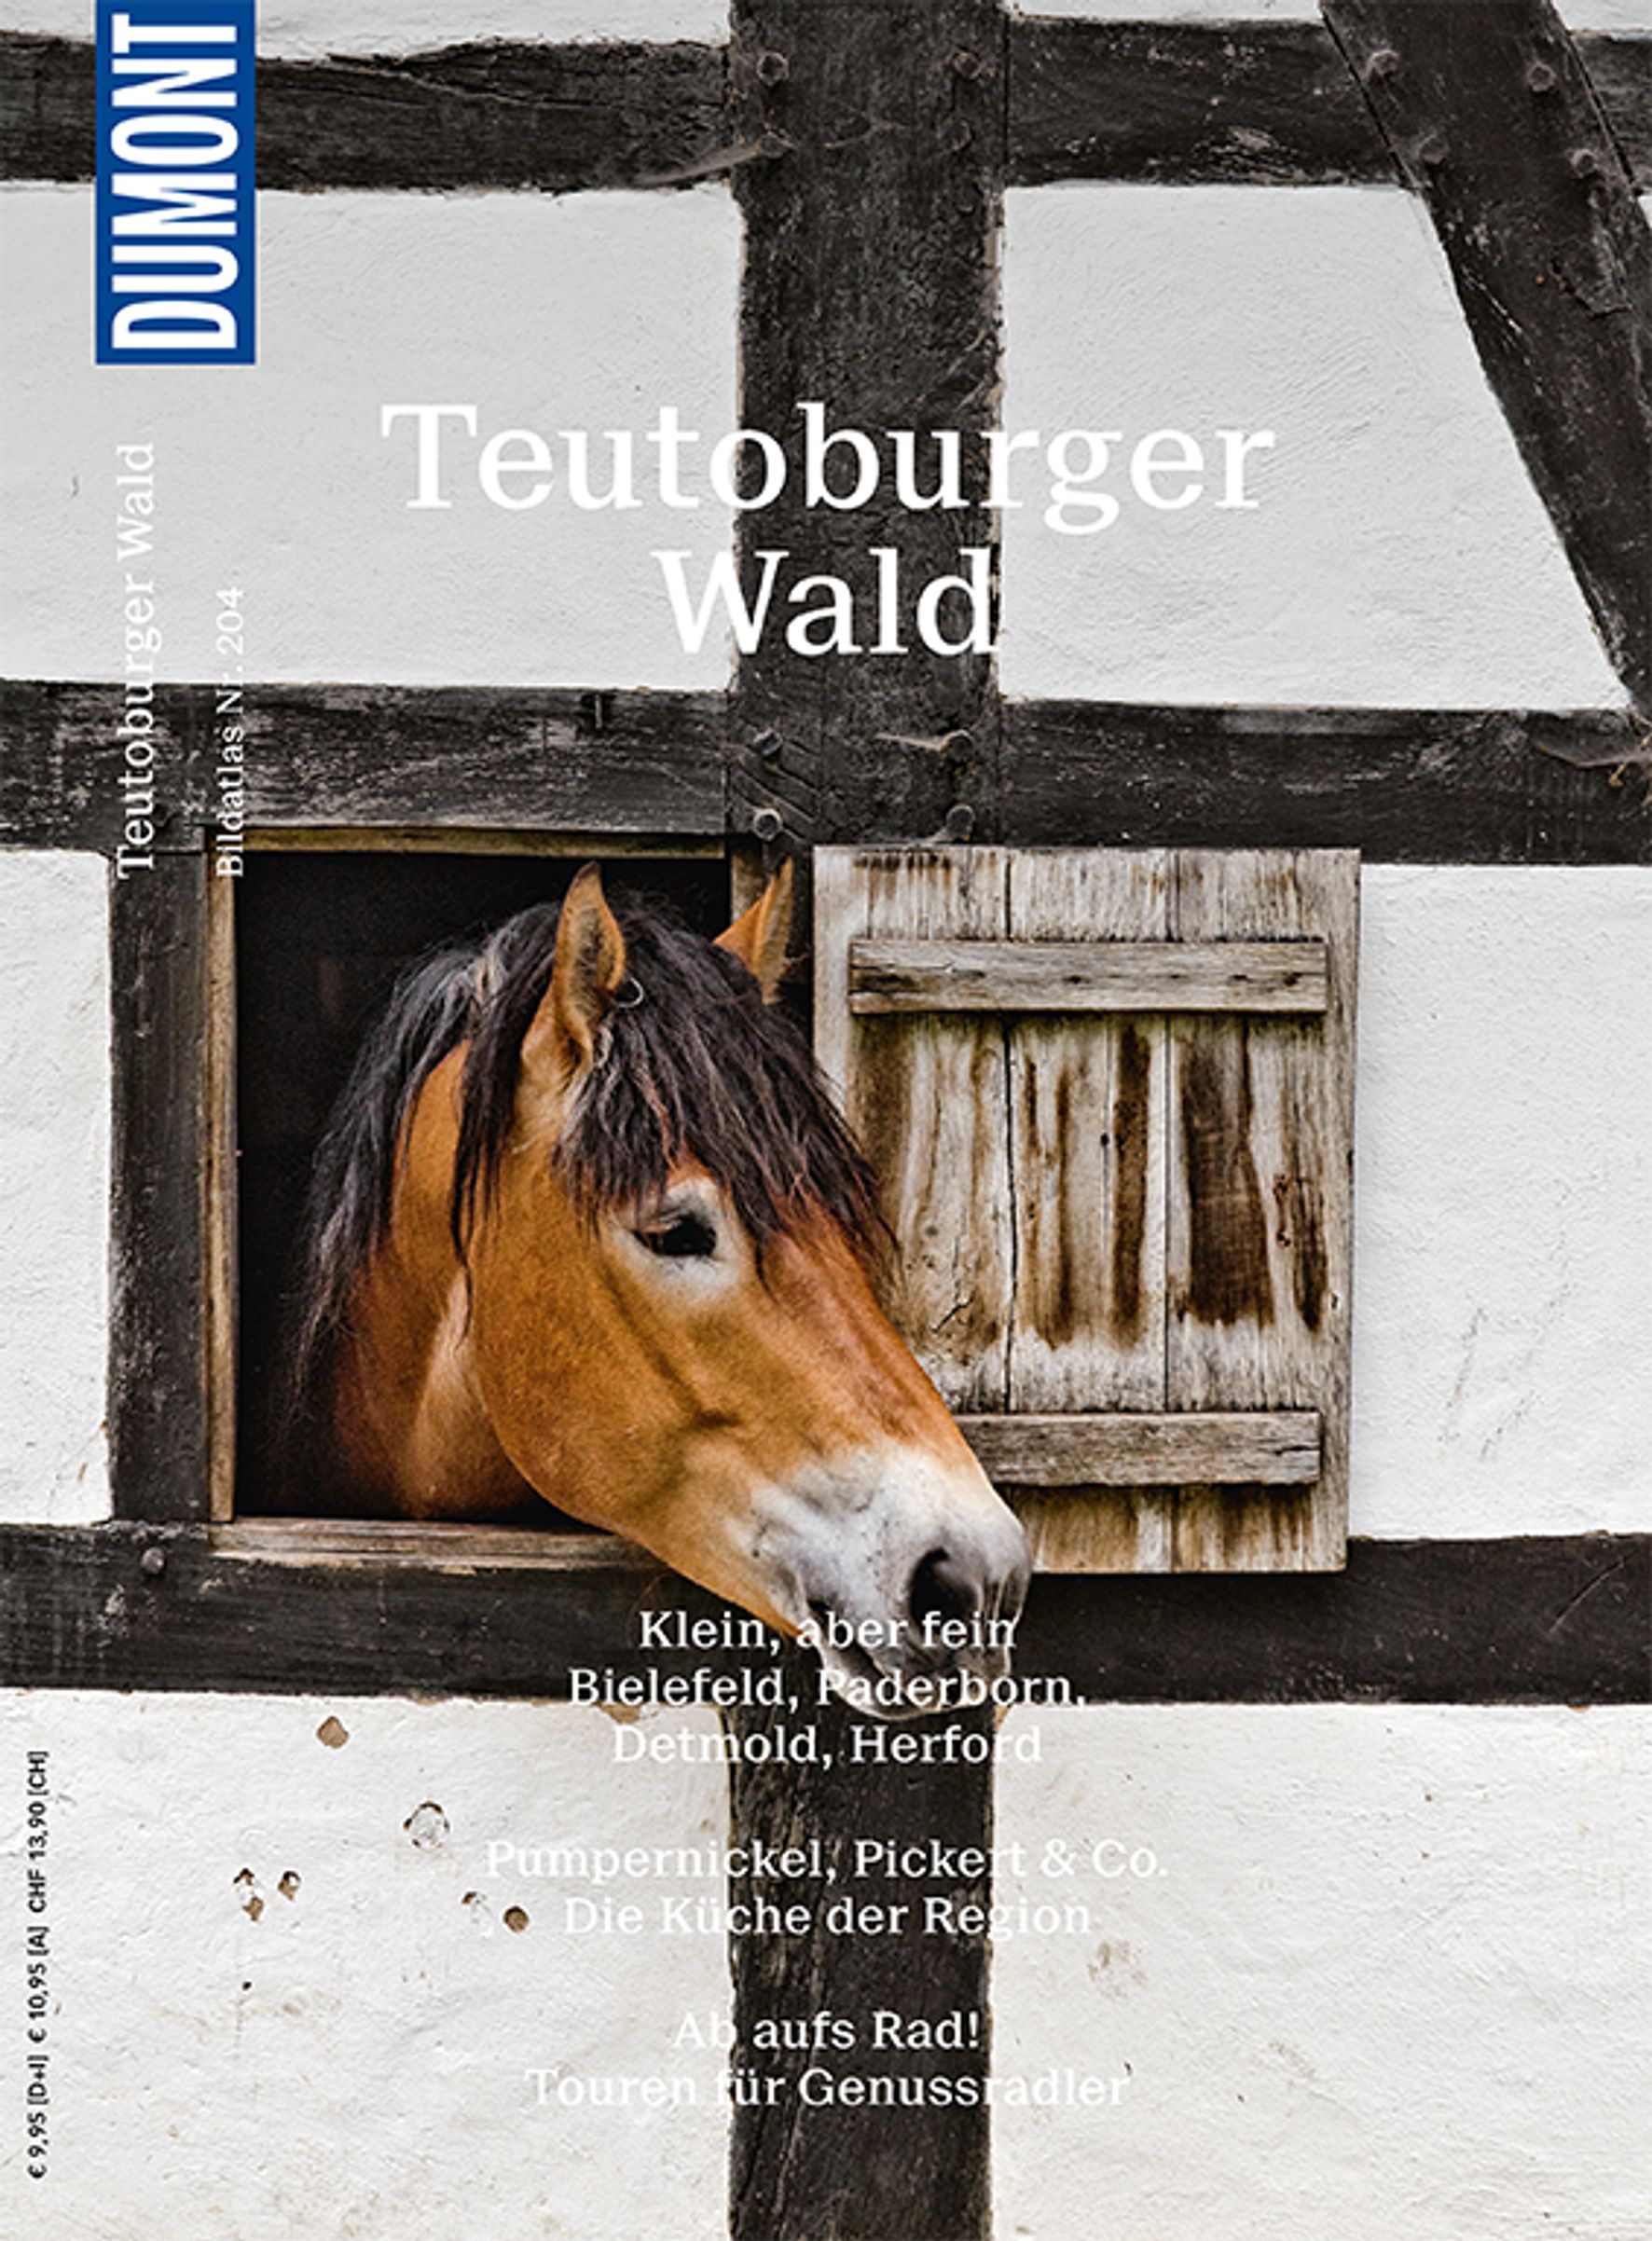 MAIRDUMONT Teutoburger Wald (eBook)